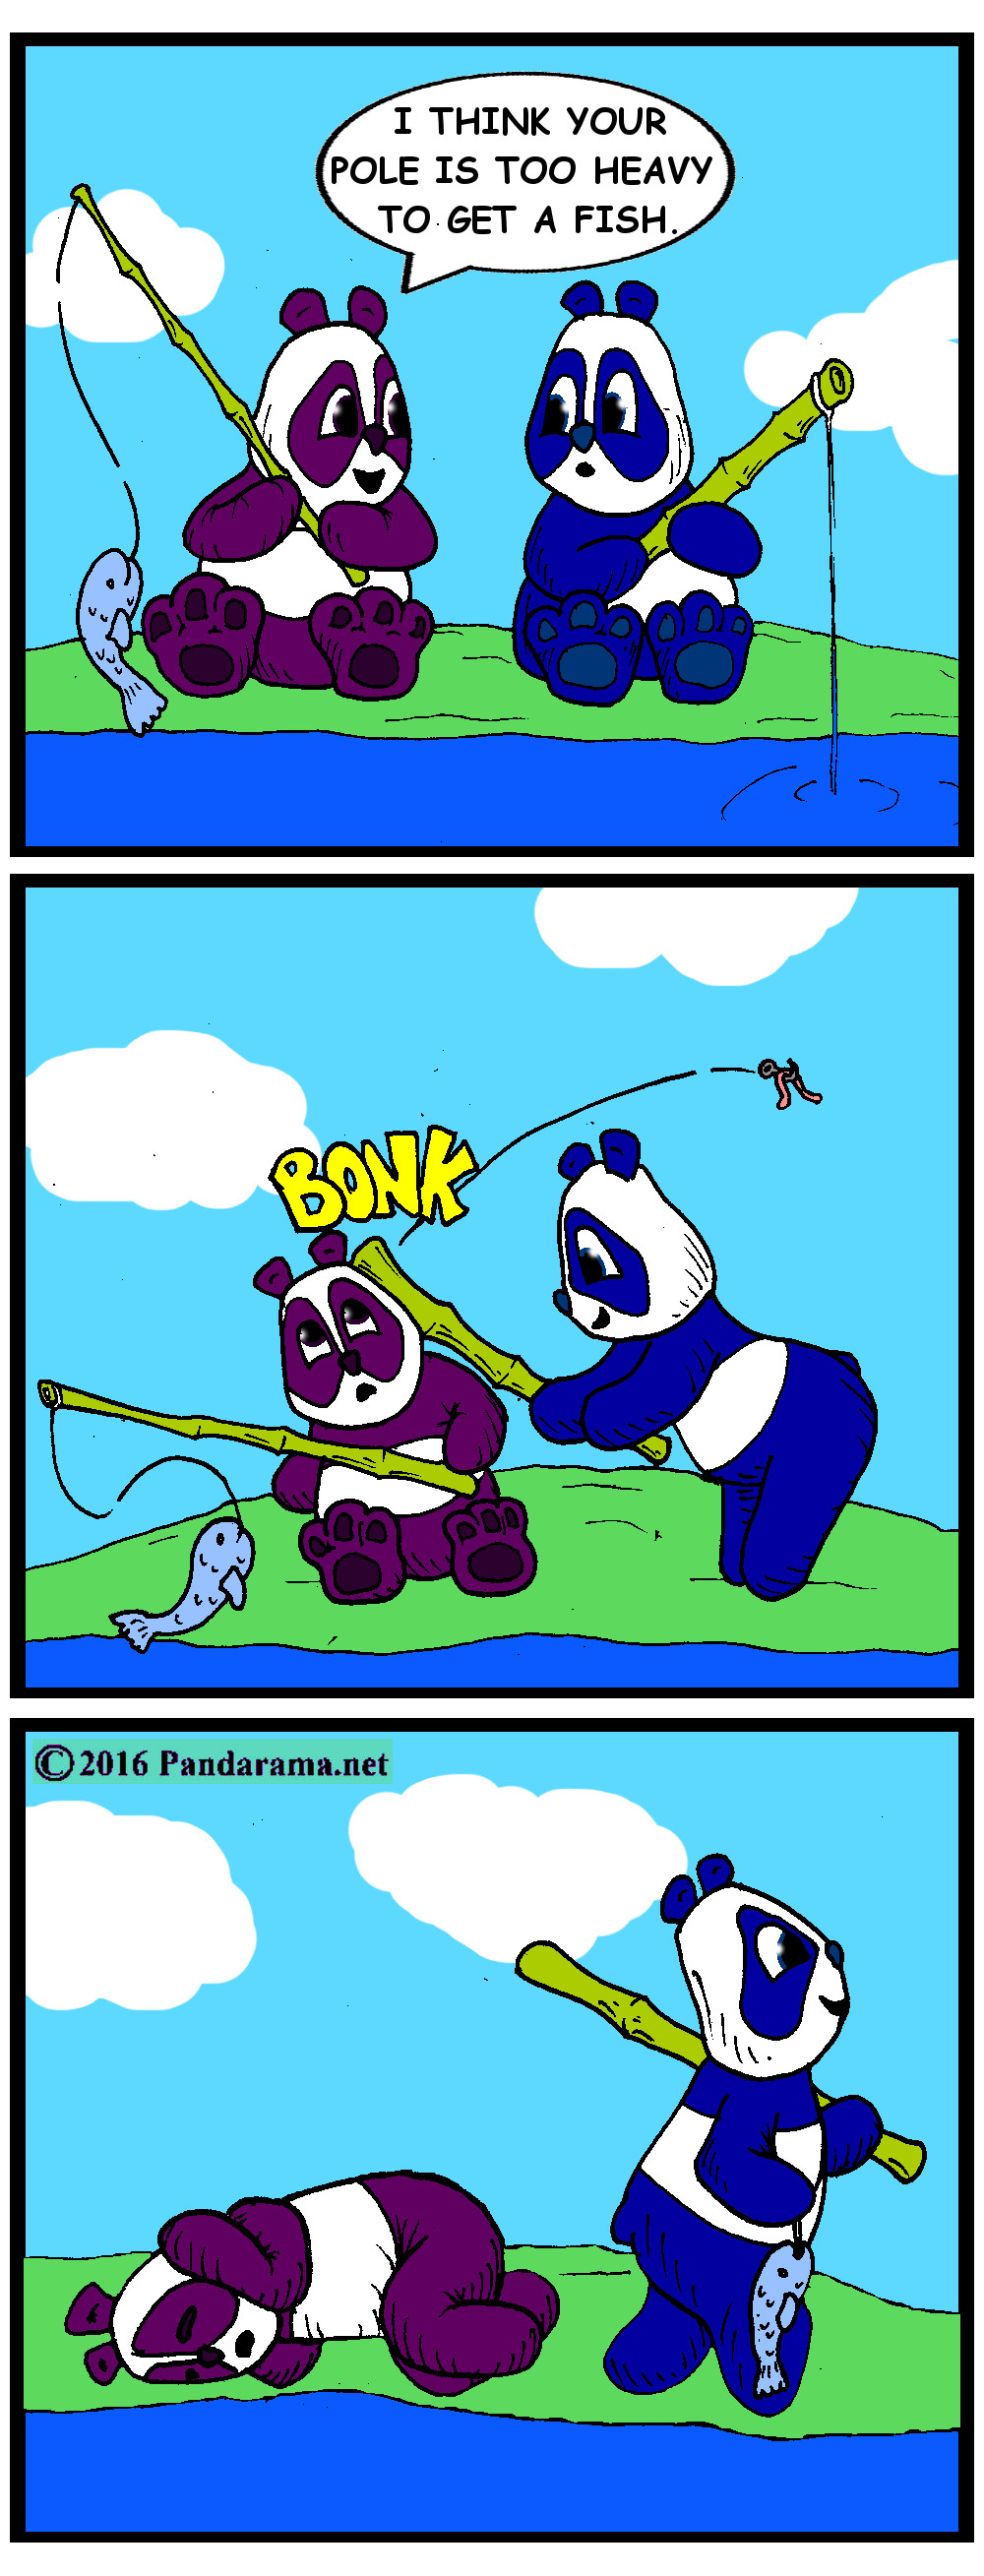 pandas fishing, one hits the other with fishing rod to steal fish. pandarama cartoon. pandorama comic.